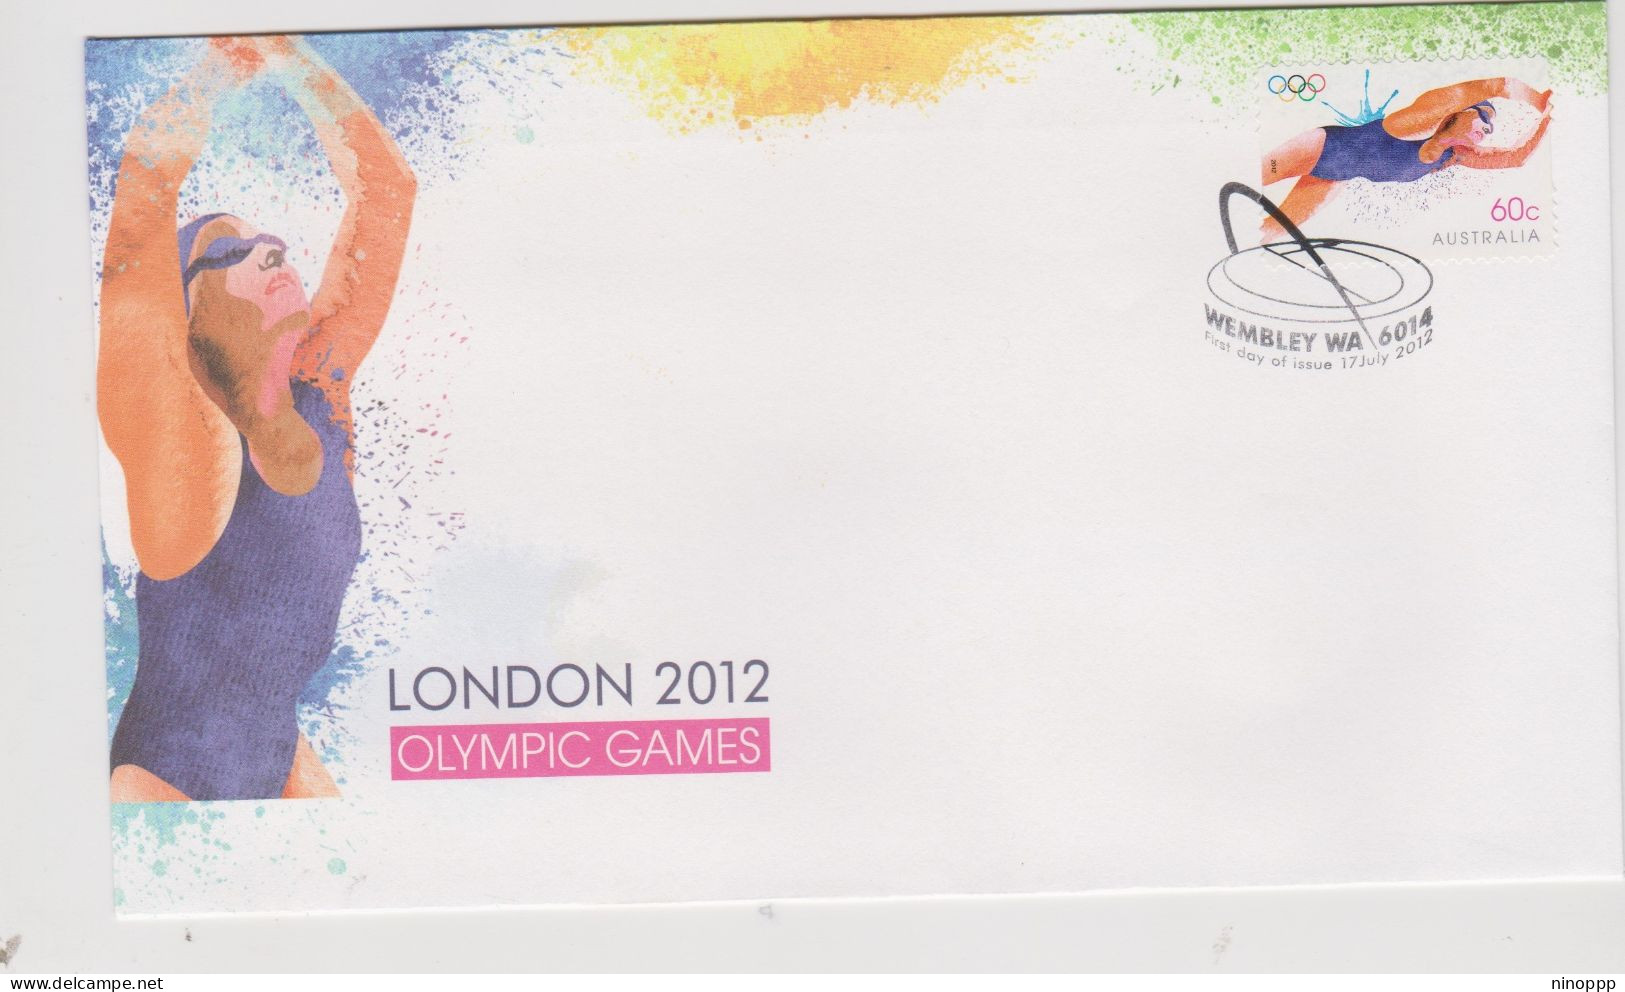 Australia 2012 London Olympic Games Self Adhesivel, First Day Cover - Bolli E Annullamenti